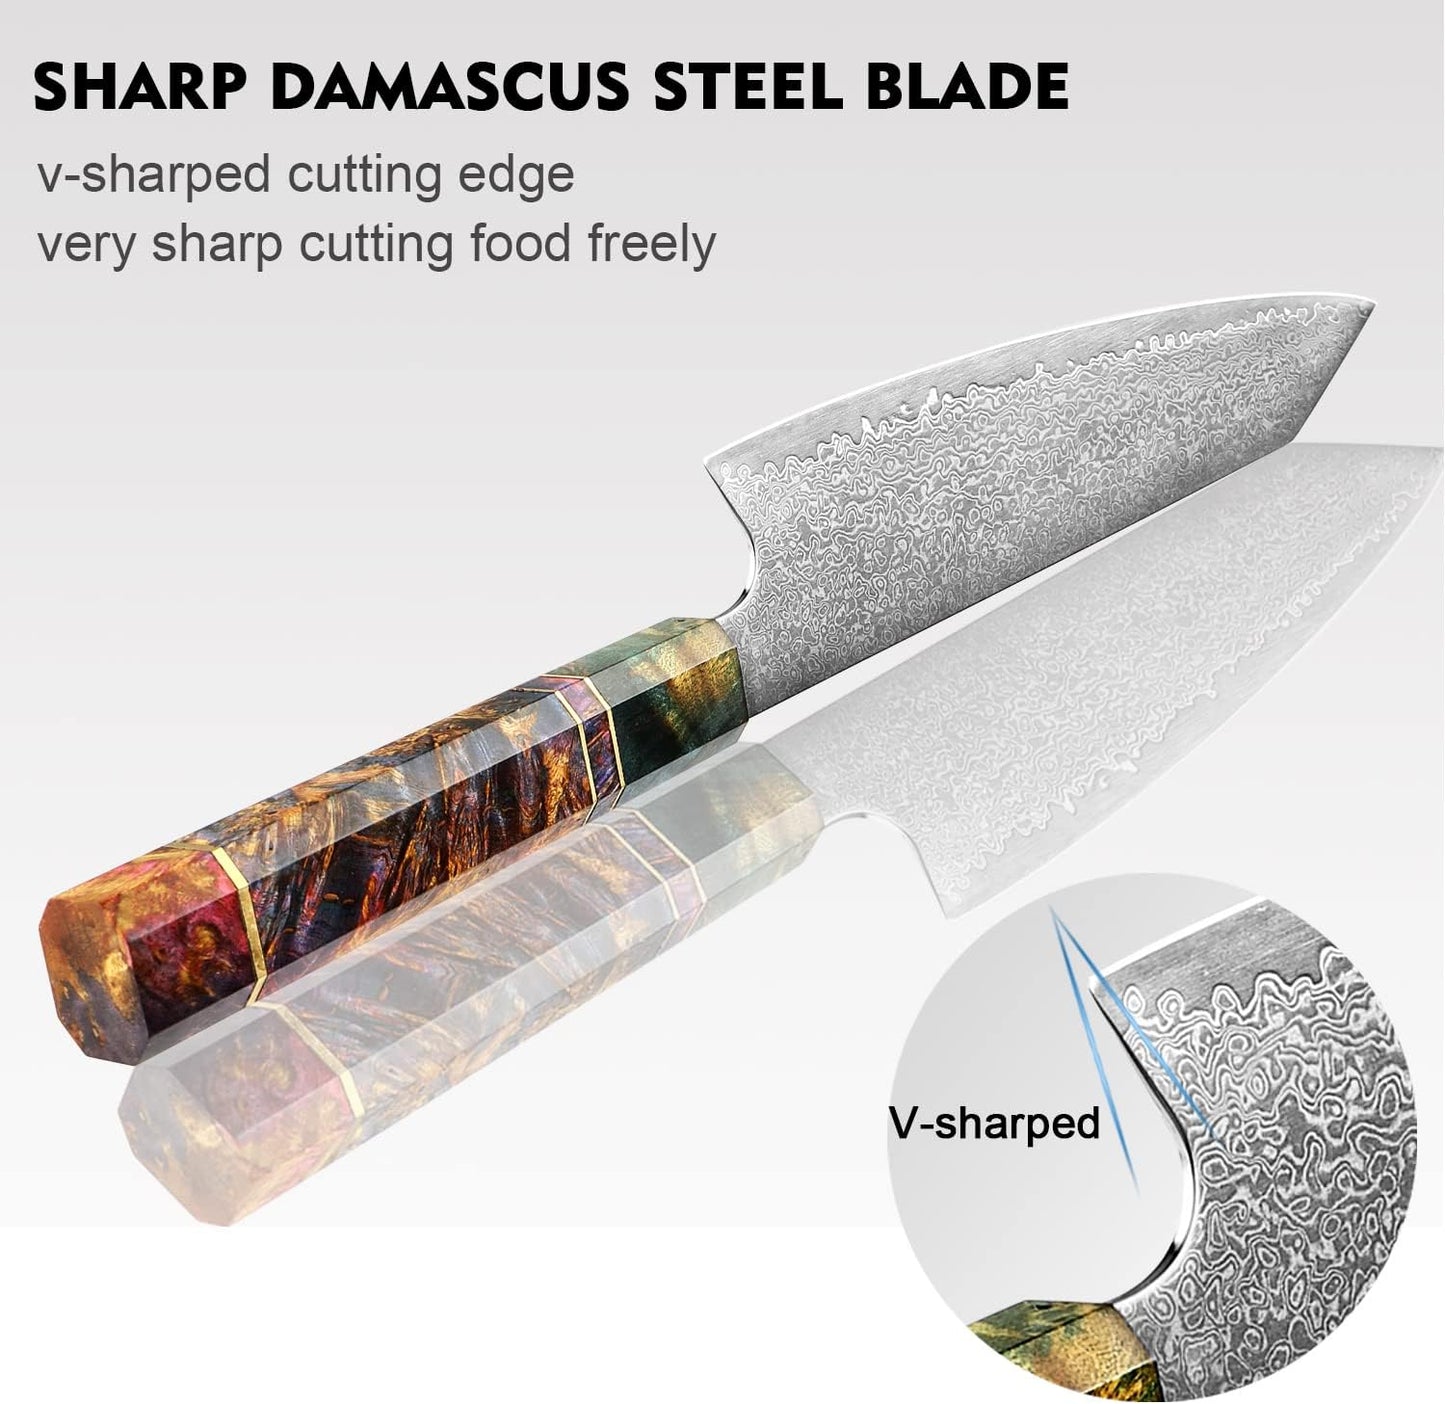 KD Japanese Kiritsuke Chef Knife 8" Damascus Steel Kitchen Knife with Sheath